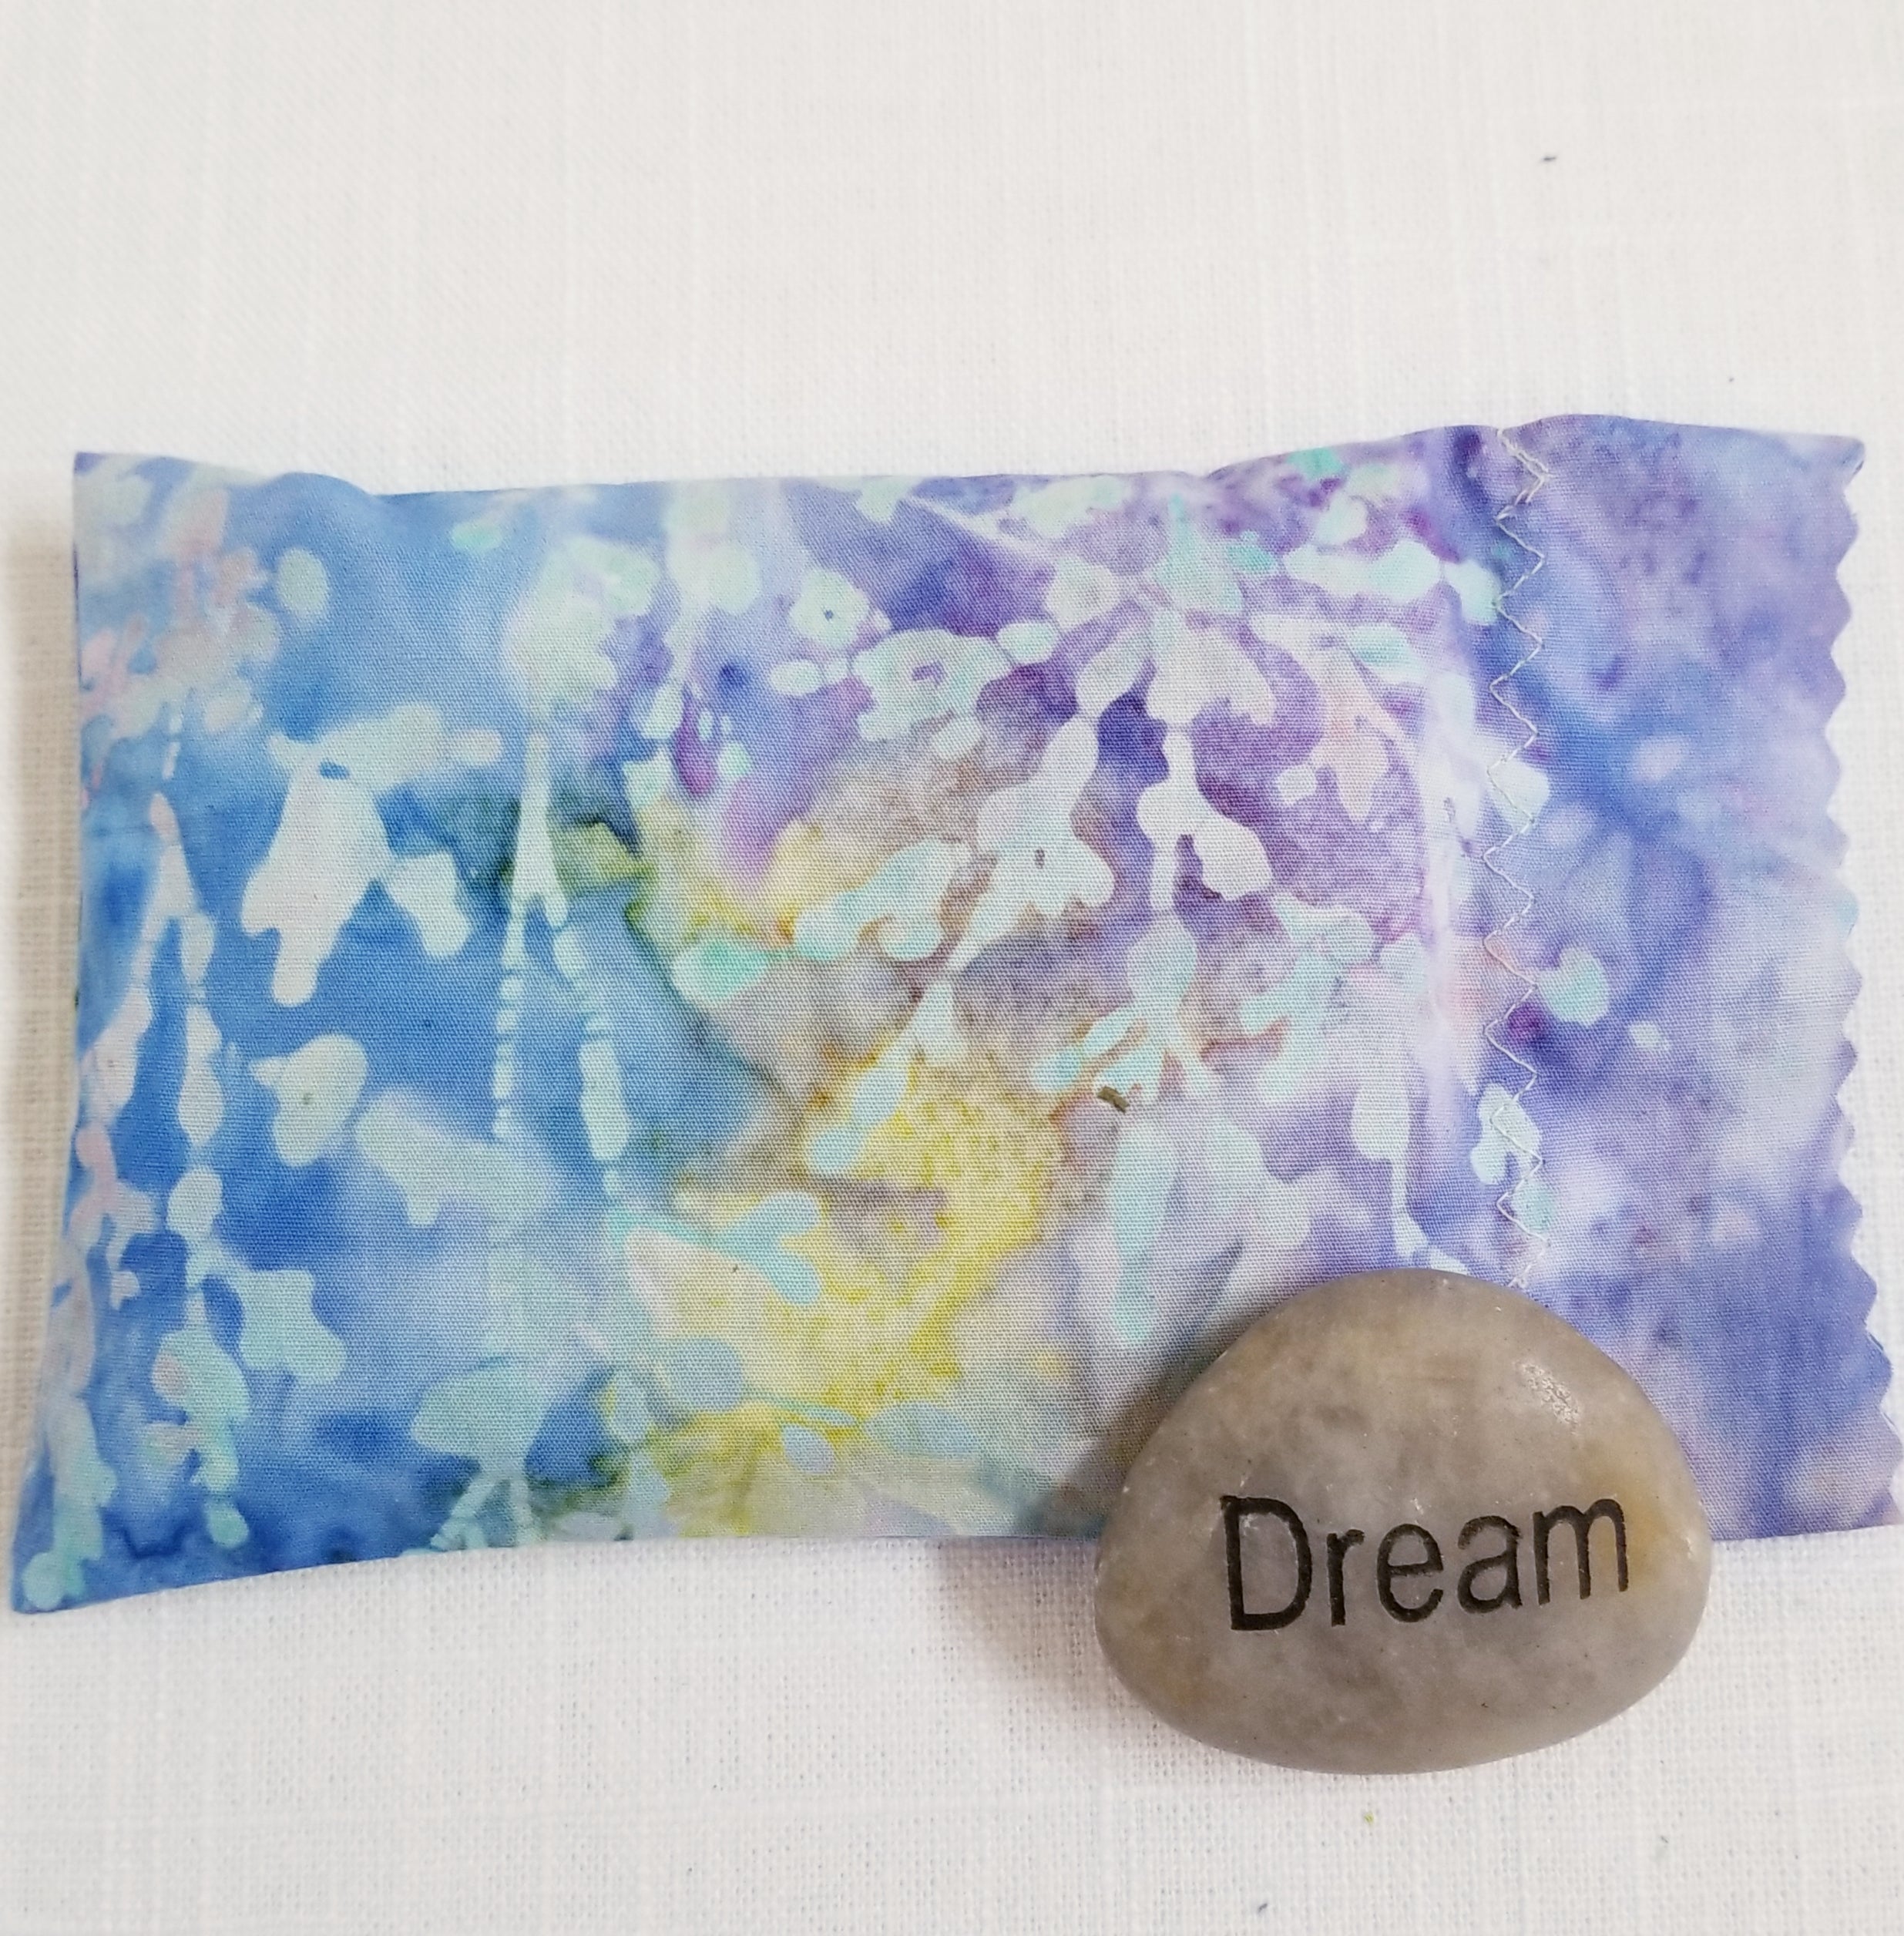 Herbal Sleep Sachet - Petite Dream Pillow for Natural Sleep and Deeper Dreams, 6" x 4", Savory Herbs for Deep Sleep, Pastel Batik